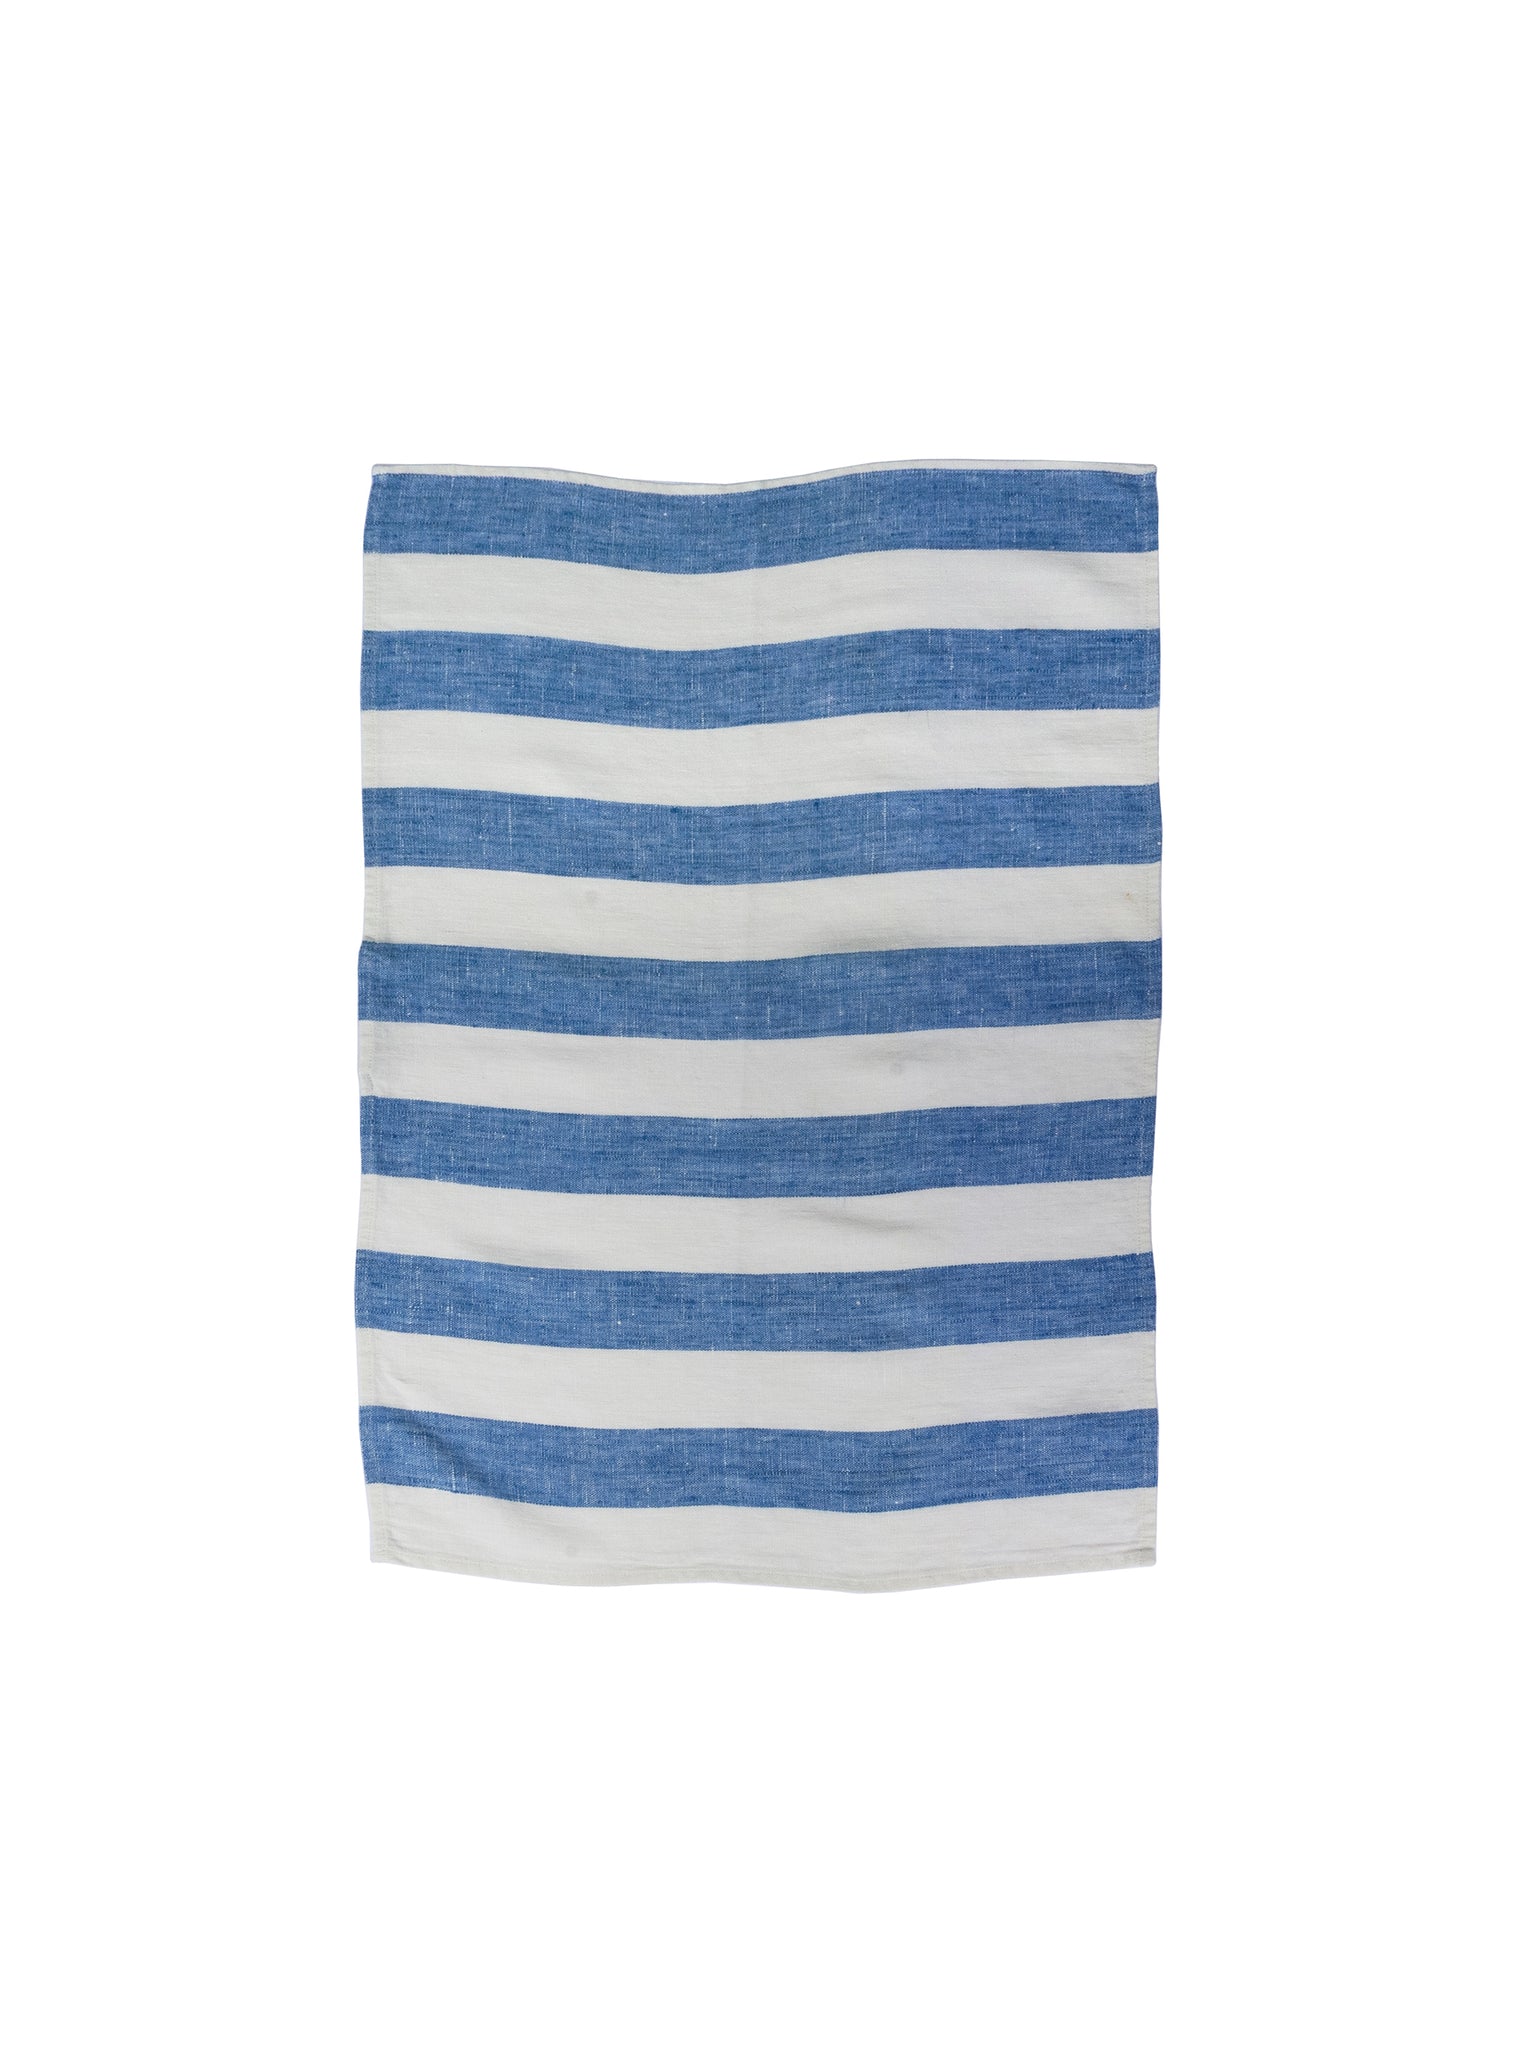 Philippe White and Blue Stripe Tea Towel Set Weston Table